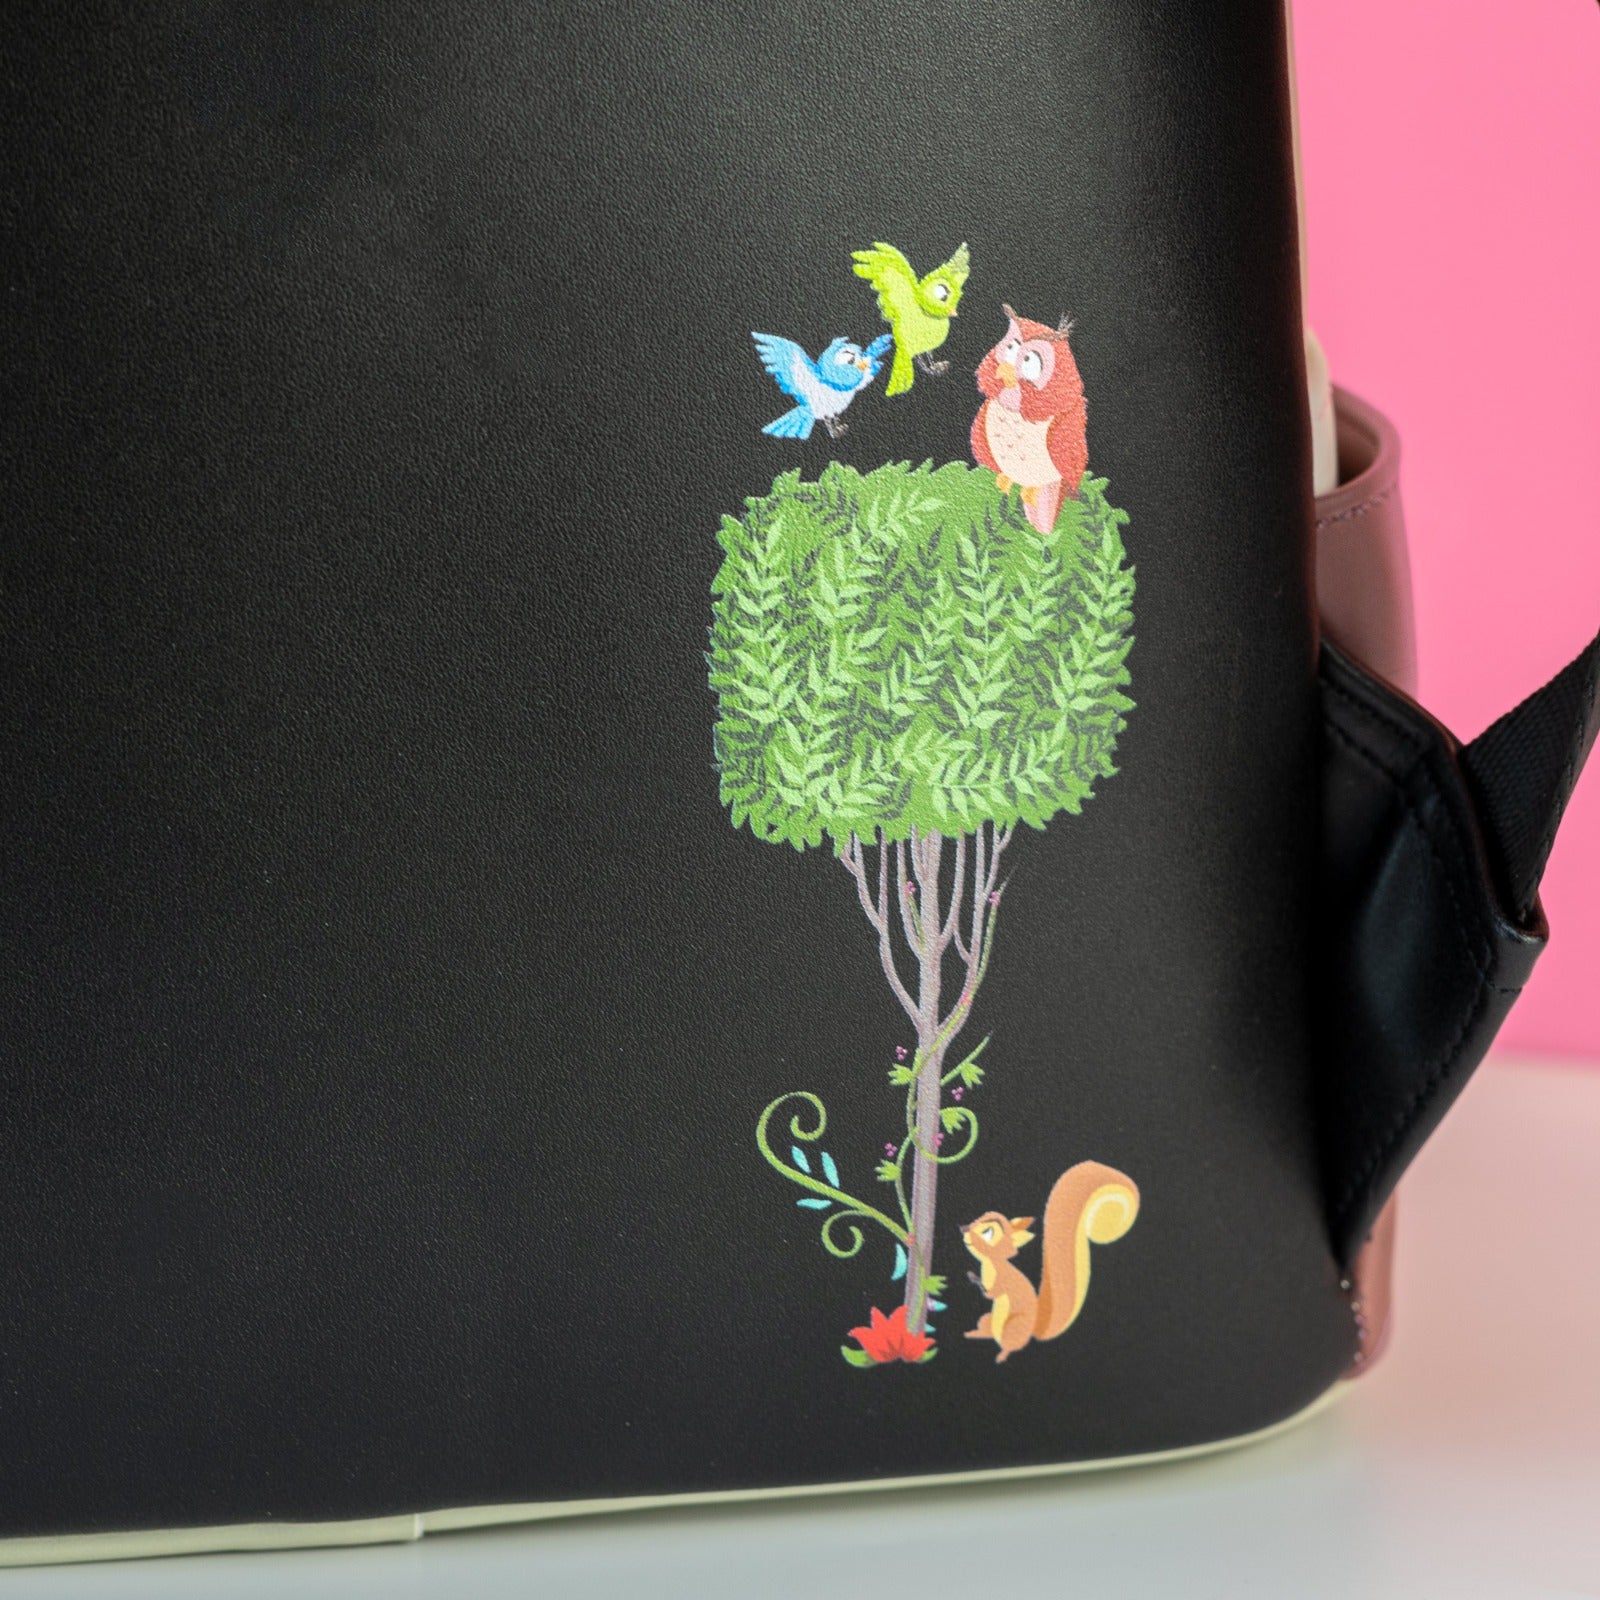 Loungefly x Disney Sleeping Beauty Princess Aurora as Briar Rose Cosplay Mini Backpack